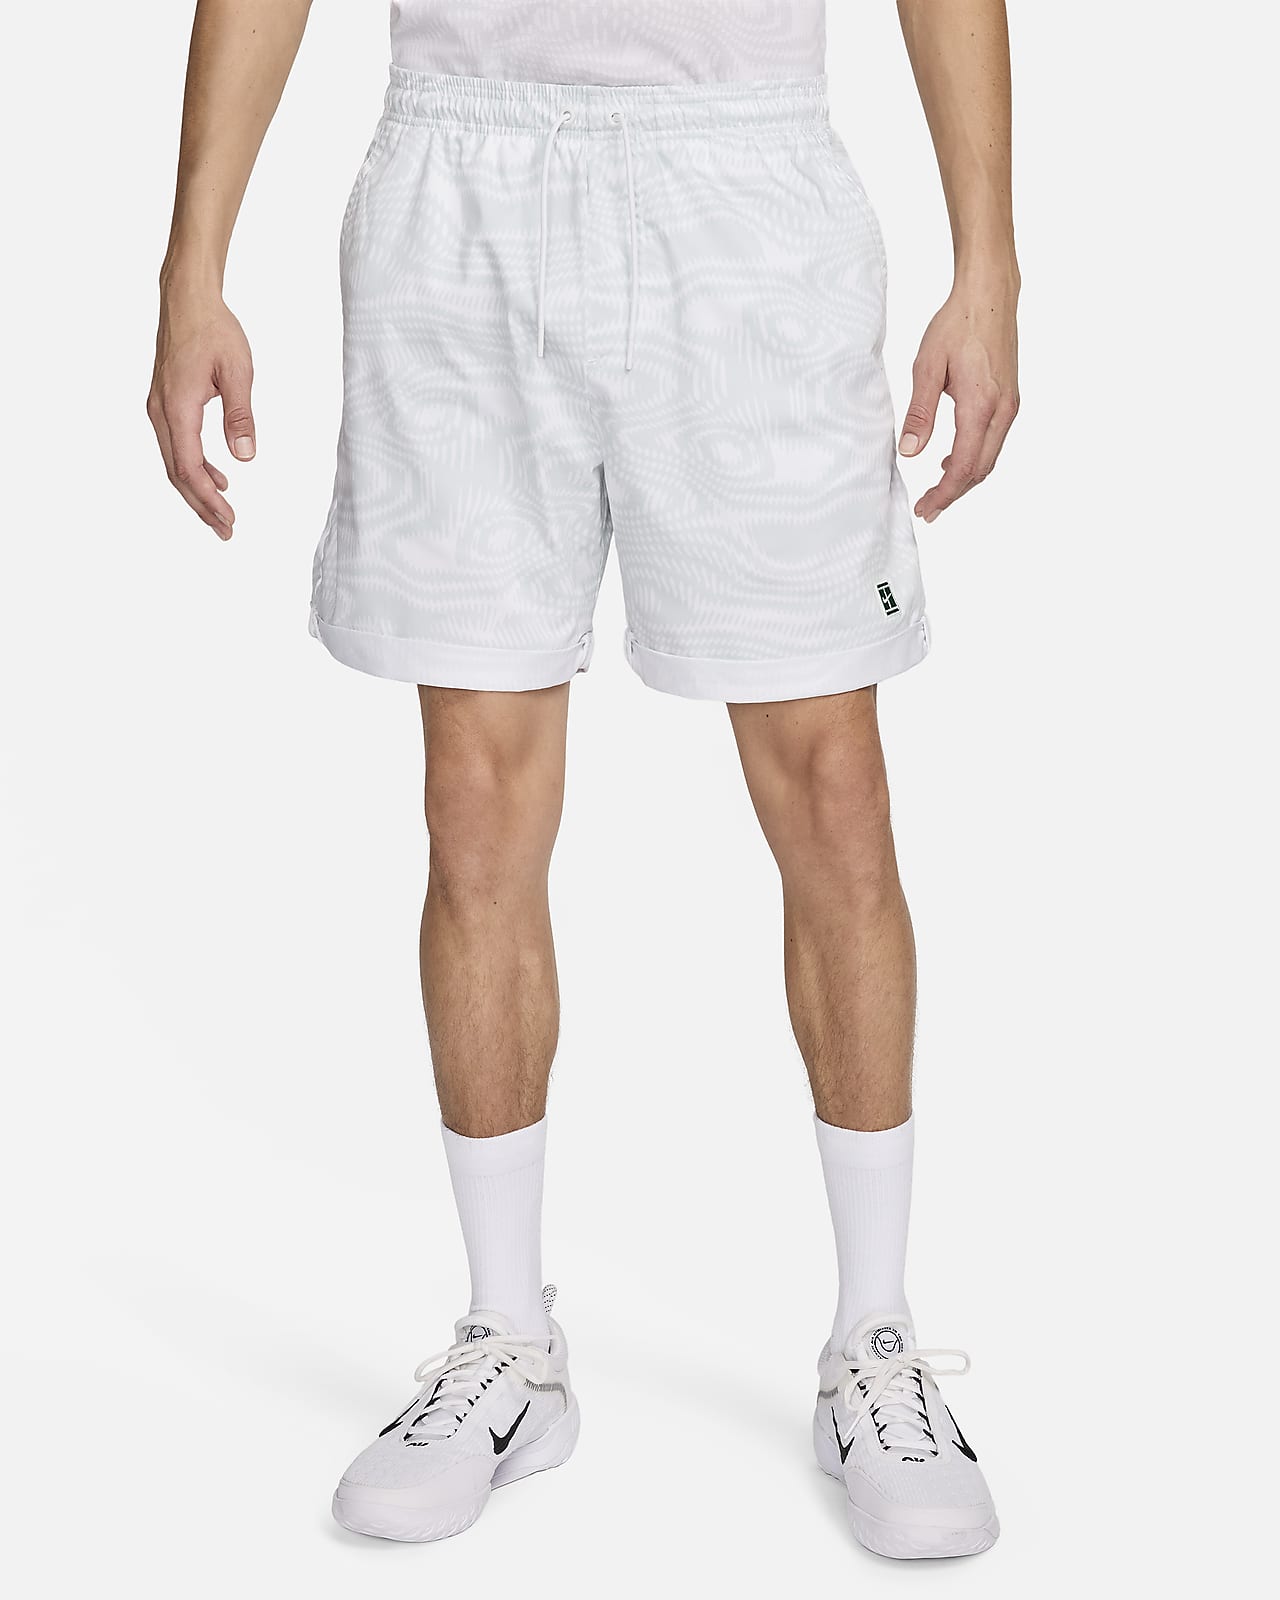 NikeCourt Heritage Dri-FIT tennisshorts til herre (15 cm)